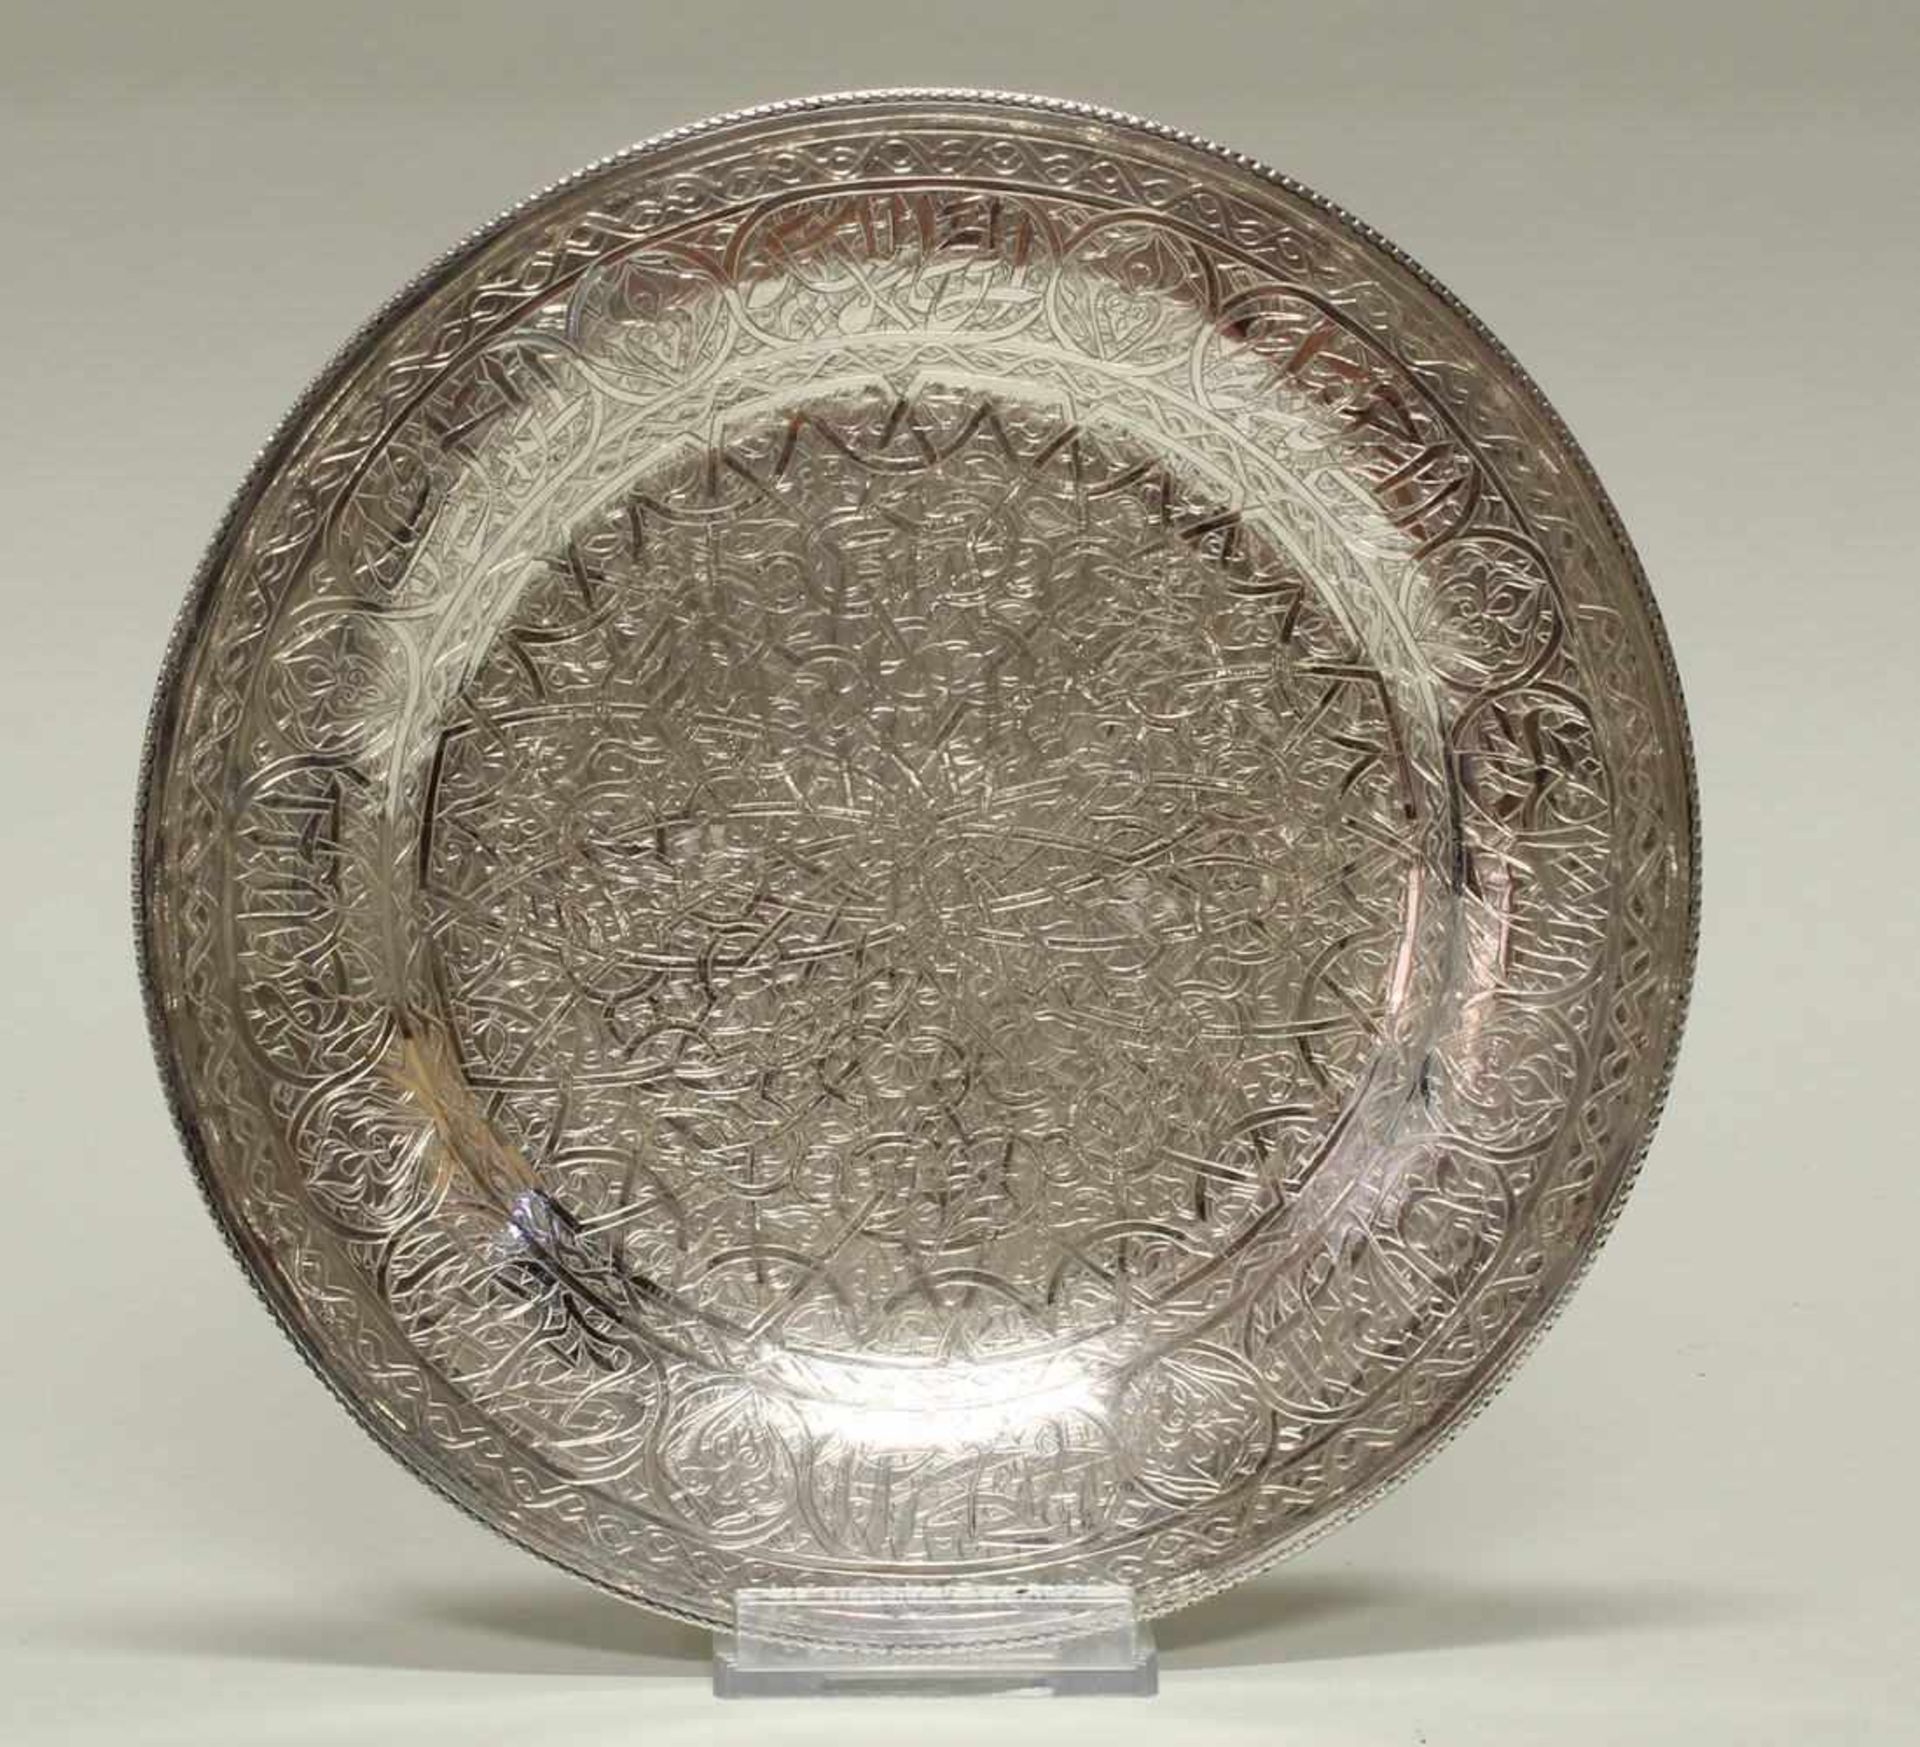 Teller, Silber, Ägypten, ornamental, ø 20.8 cm, ca. 223 g- - -25.00 % buyer's premium on the